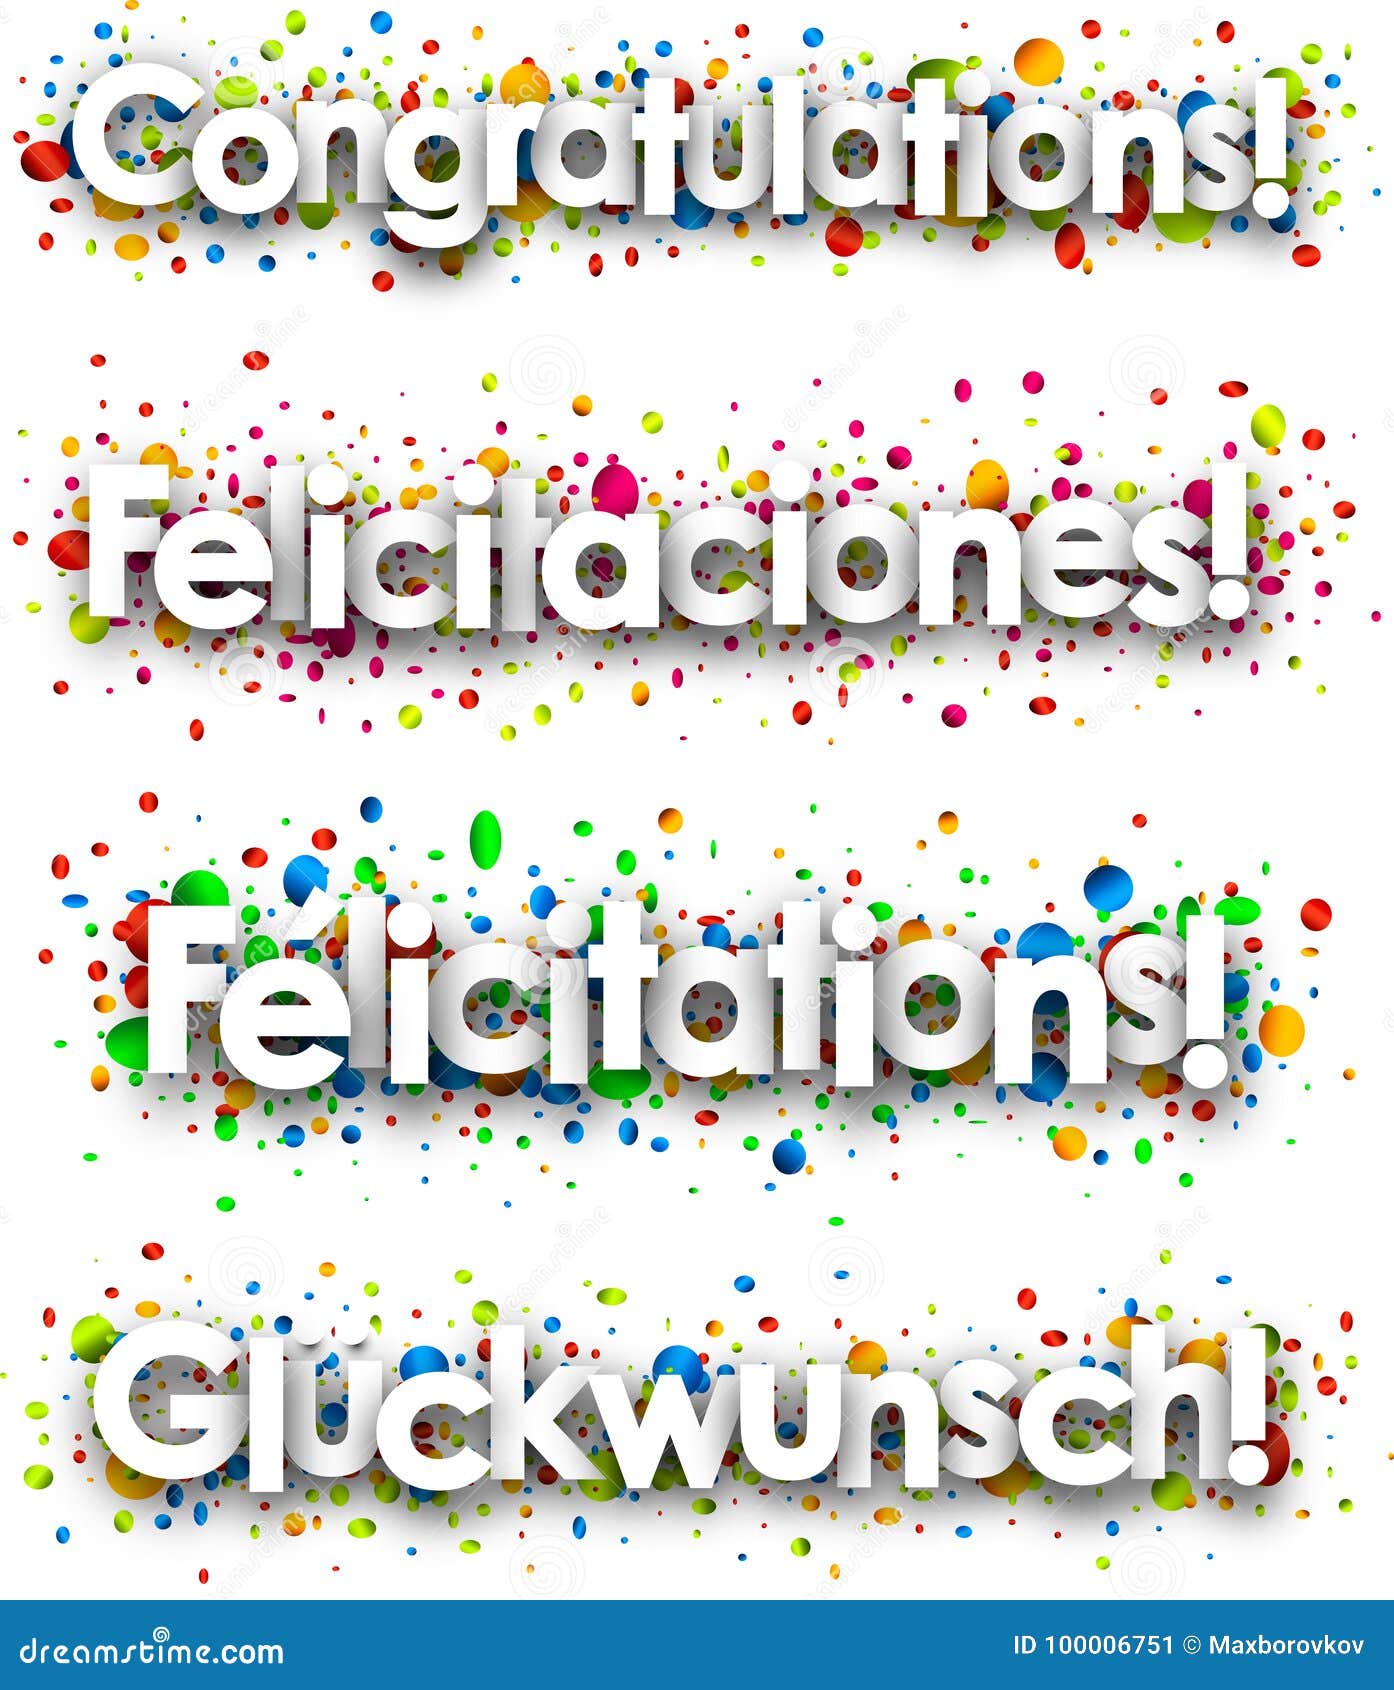 Congratulations Banner With Colorful Confetti Stock Vector